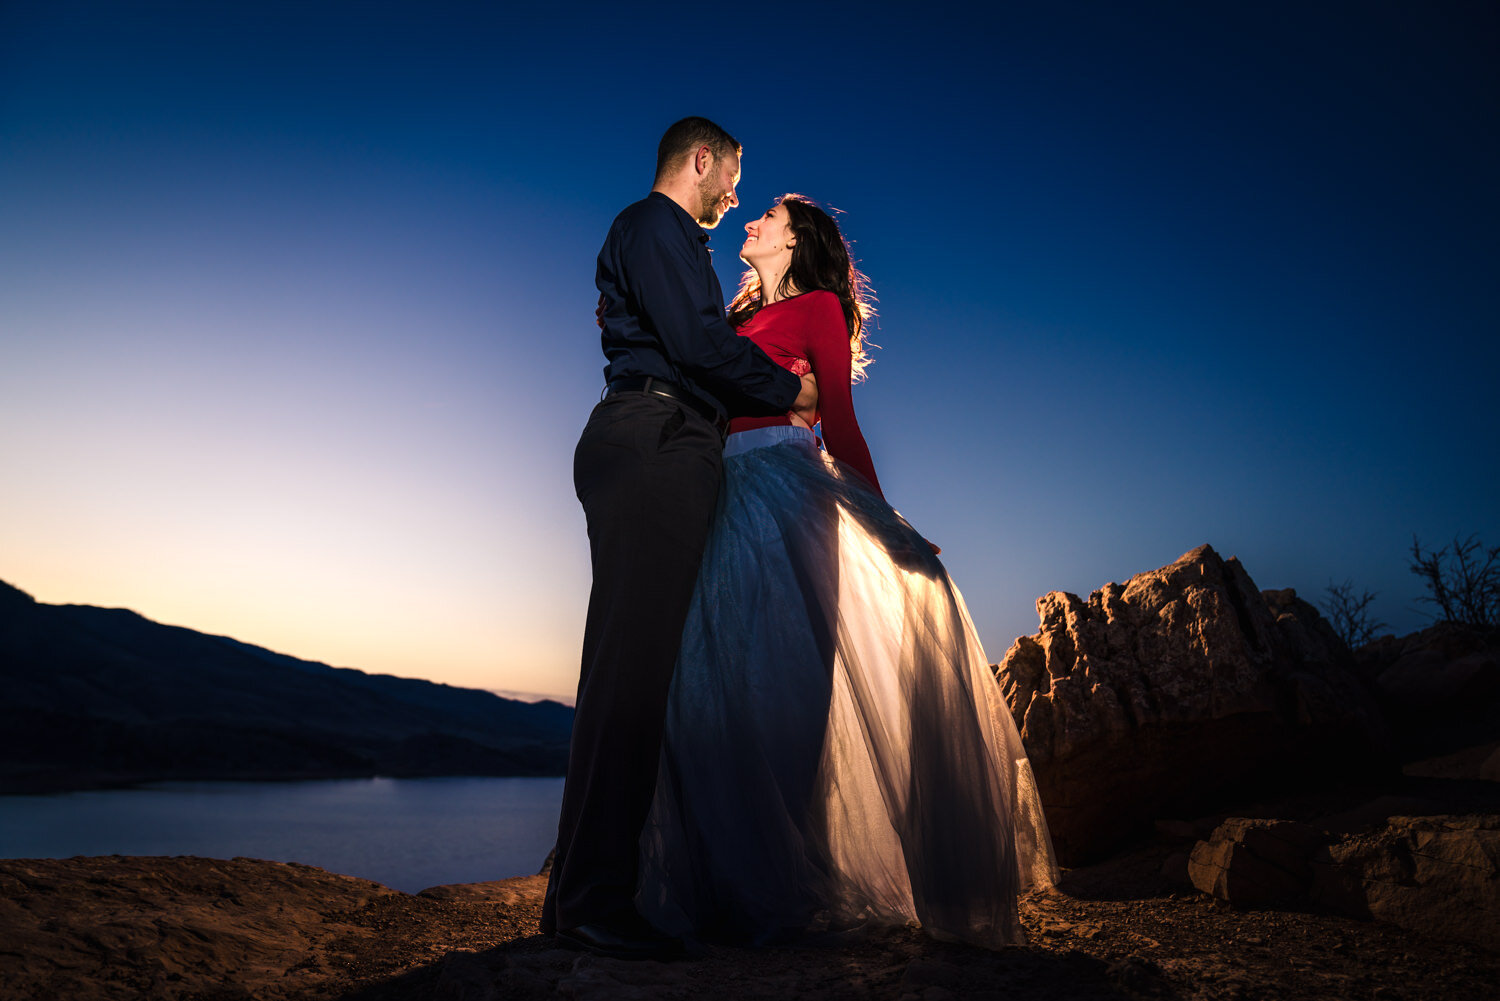  Horsetooth Reservoir Engagement Photos by Fort Collins Wedding Photographer JMGant Photography 